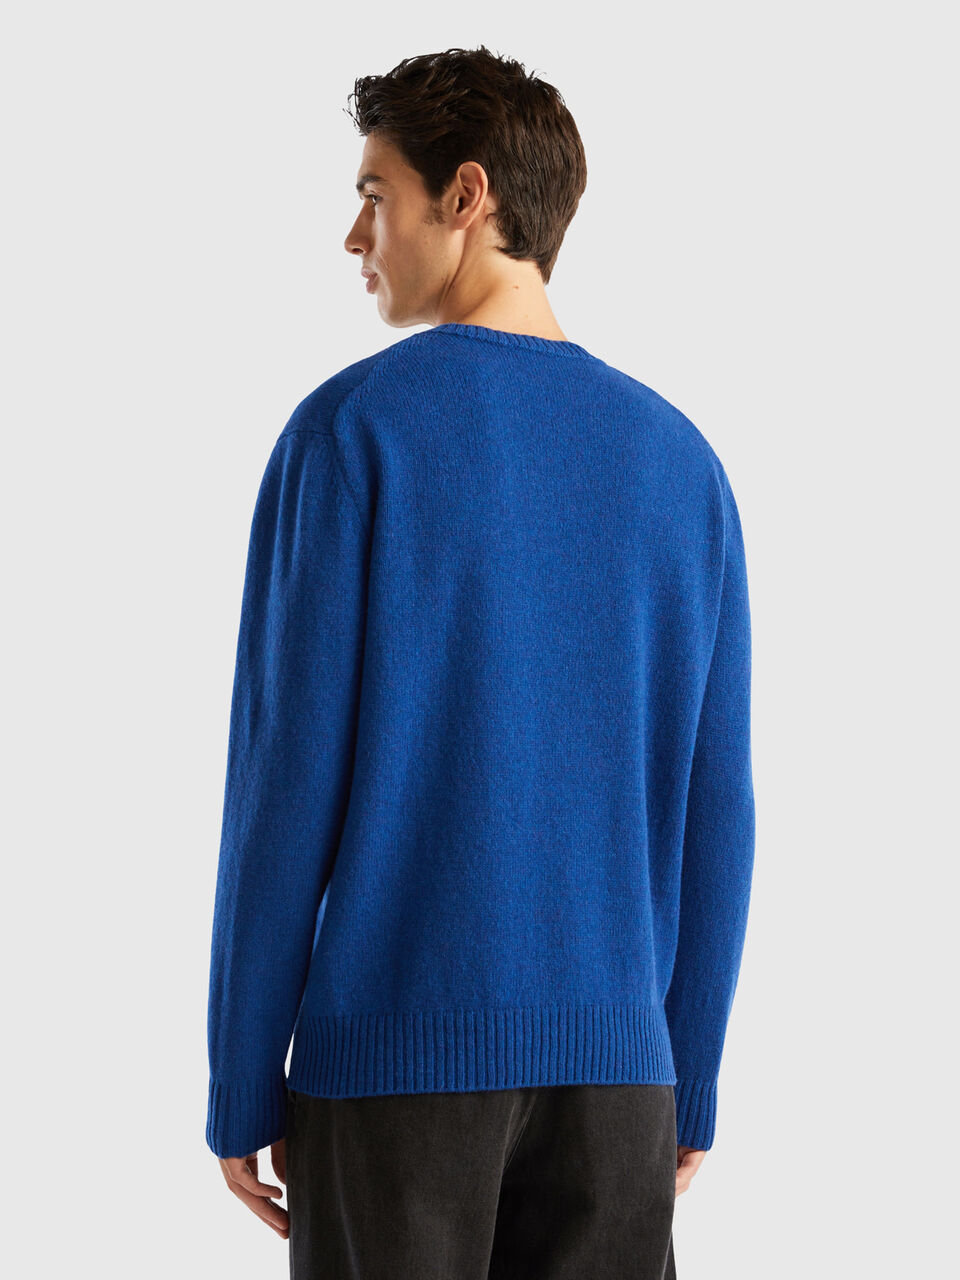 Highlands Shetland Sweater in Stone Blue – RIVAY